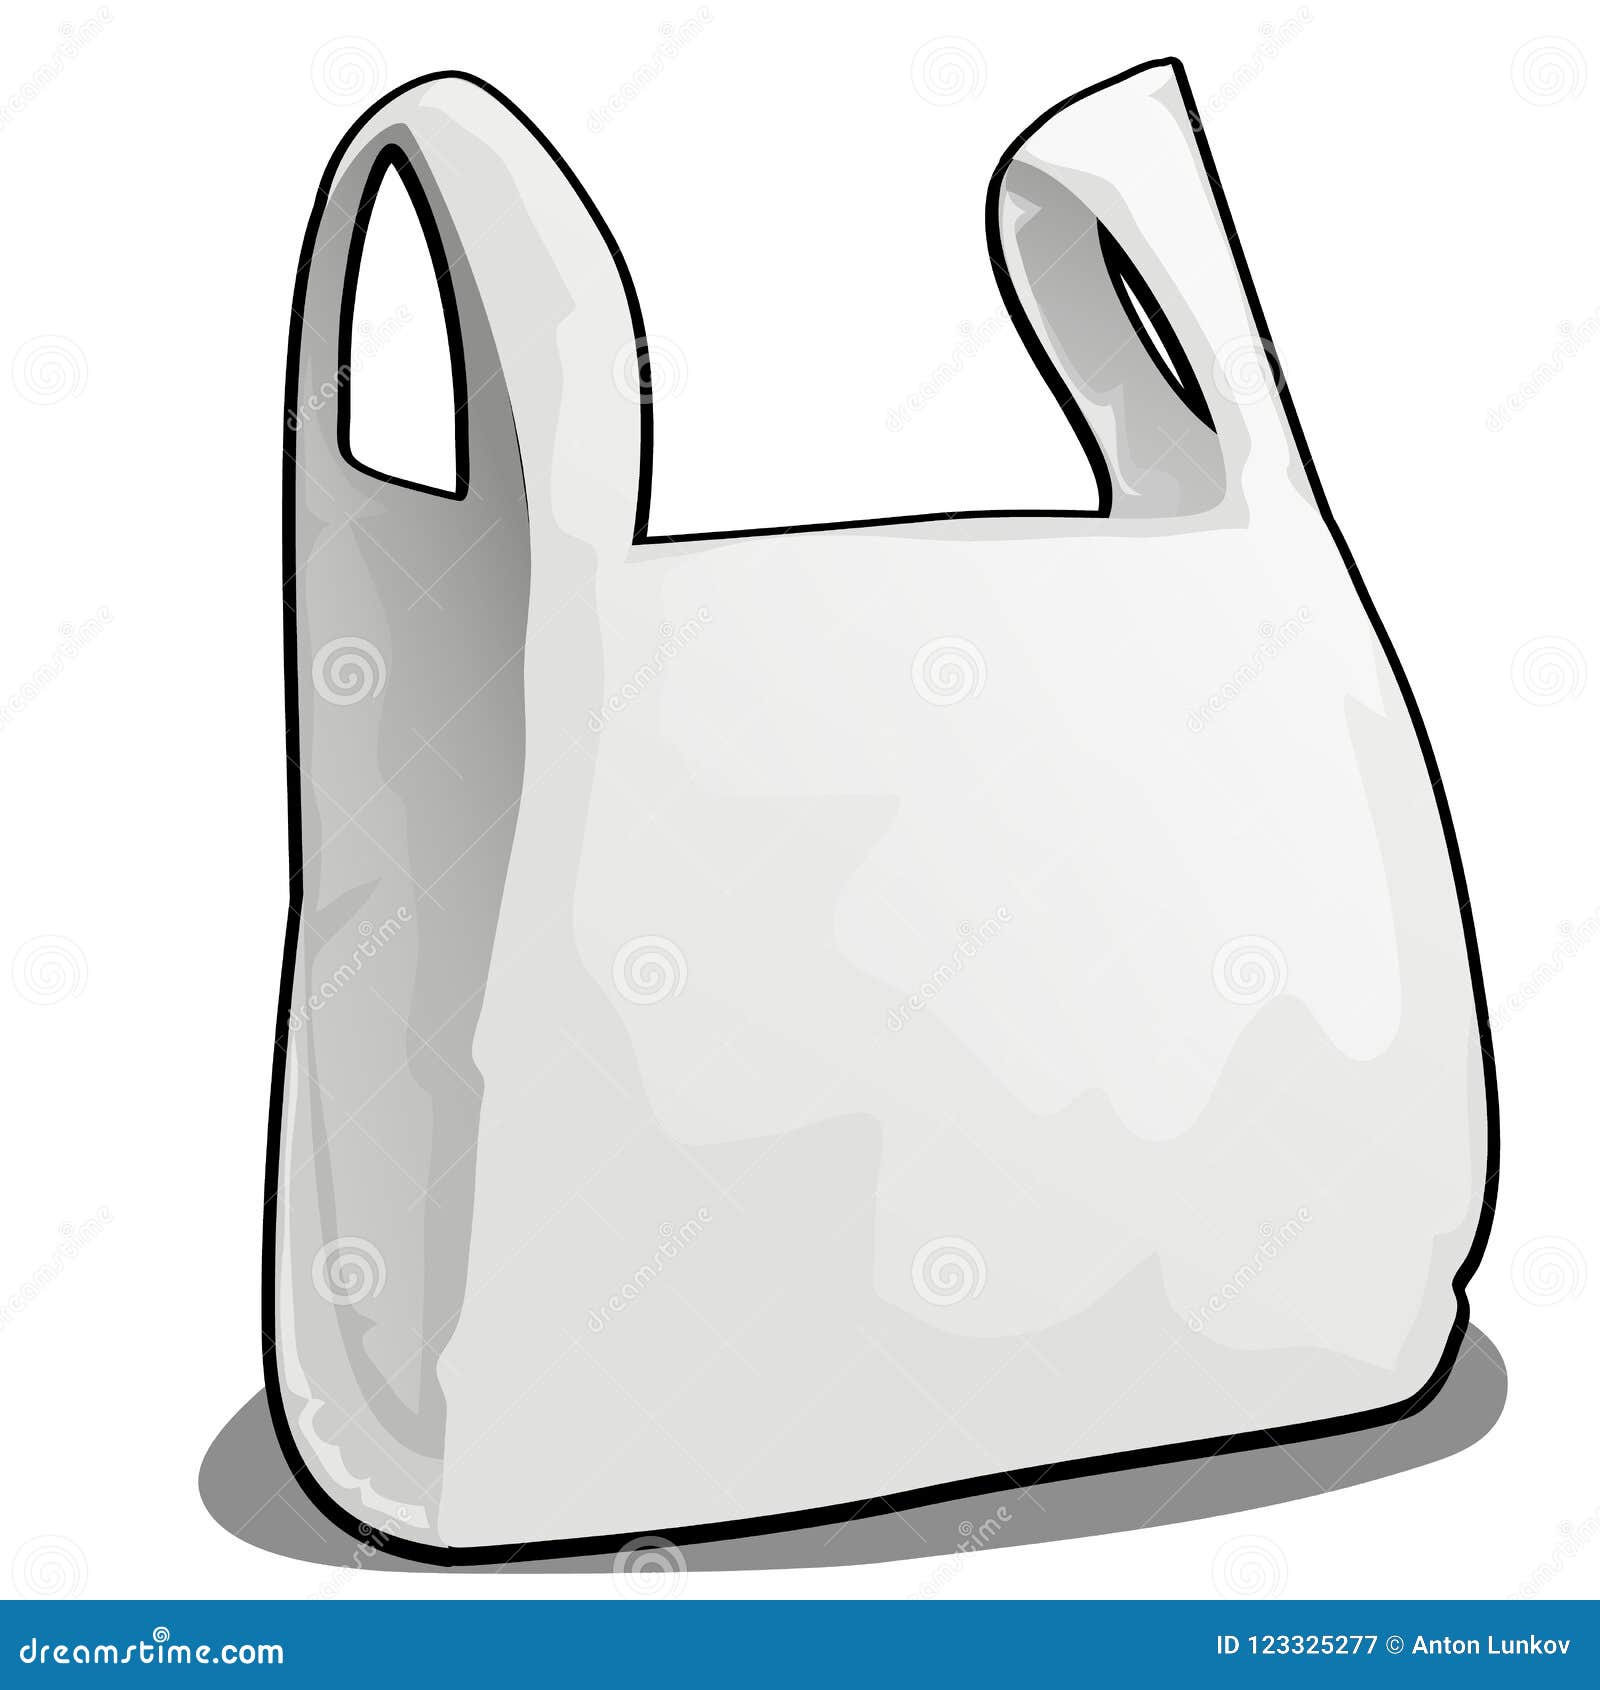 This $25 Crossbody Looks Like a Polène Bag